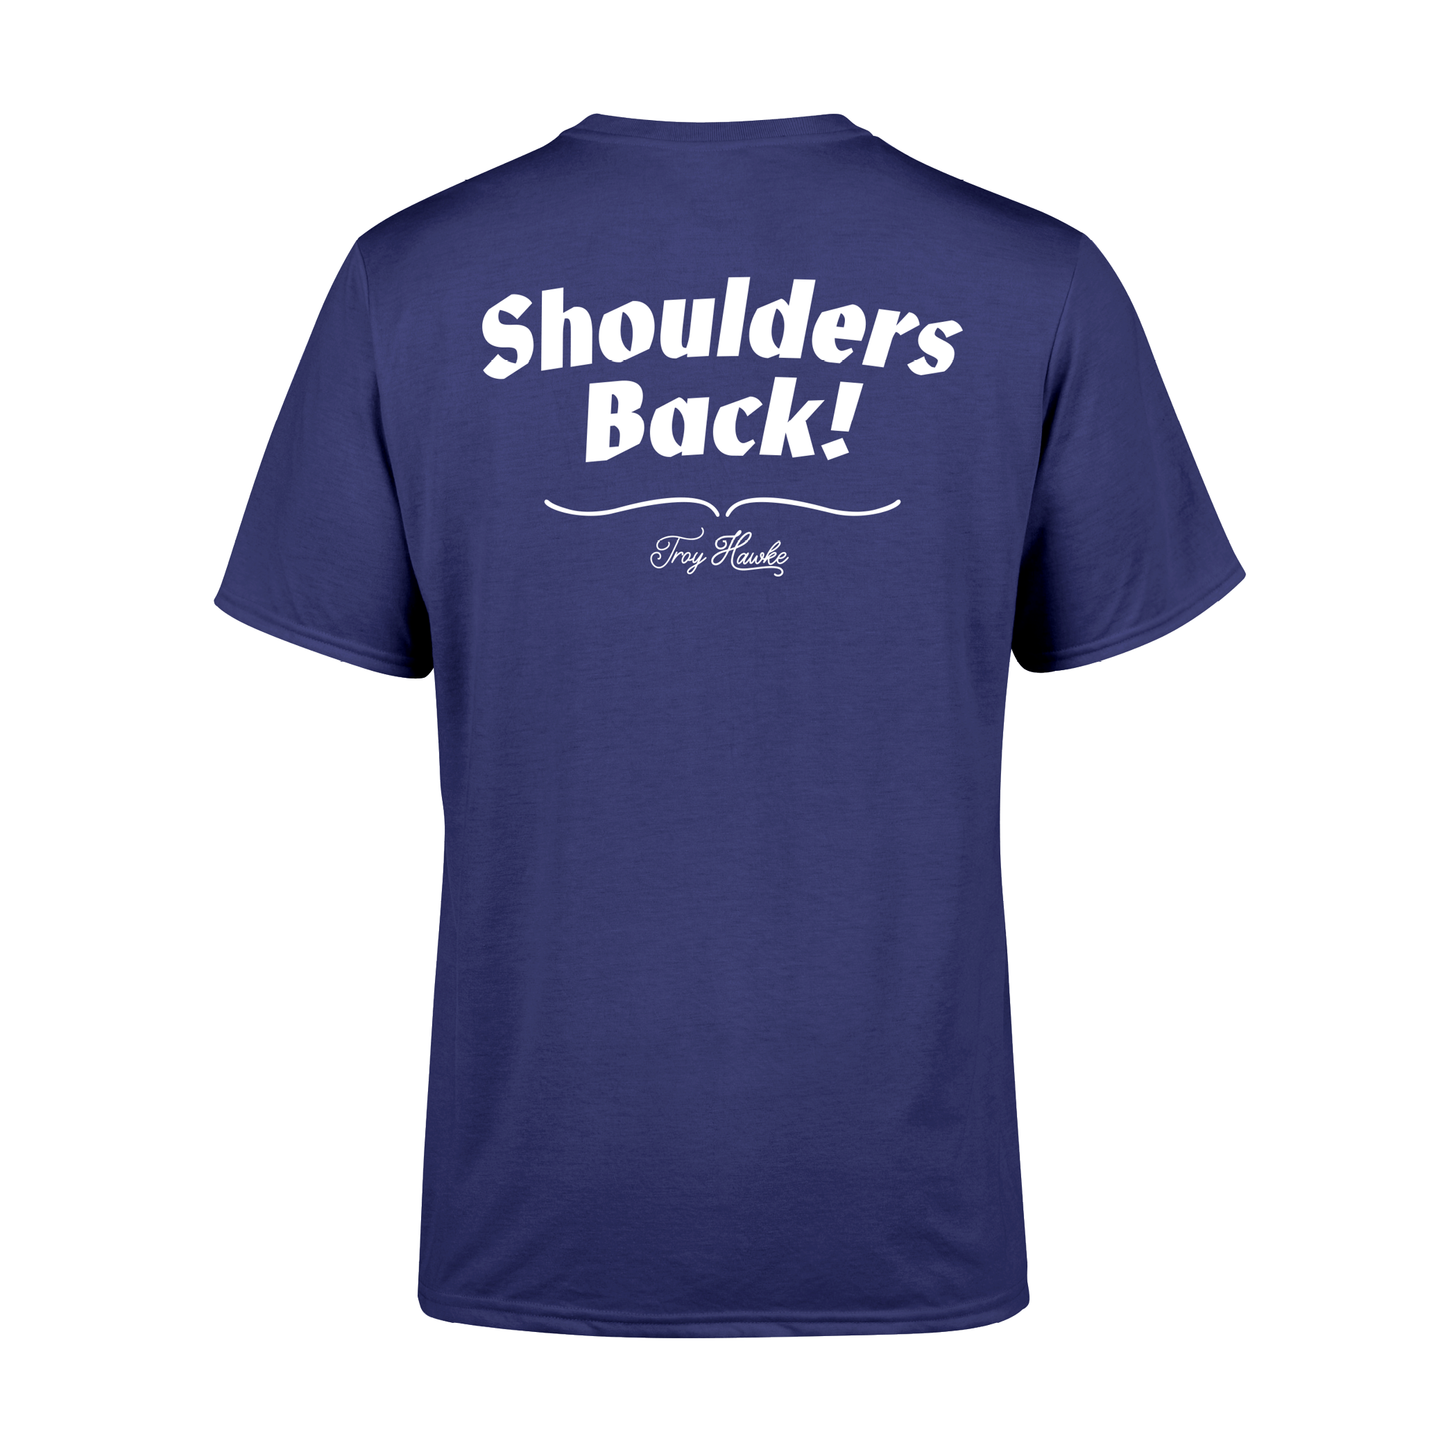 NEW Shoulders Back T-Shirt